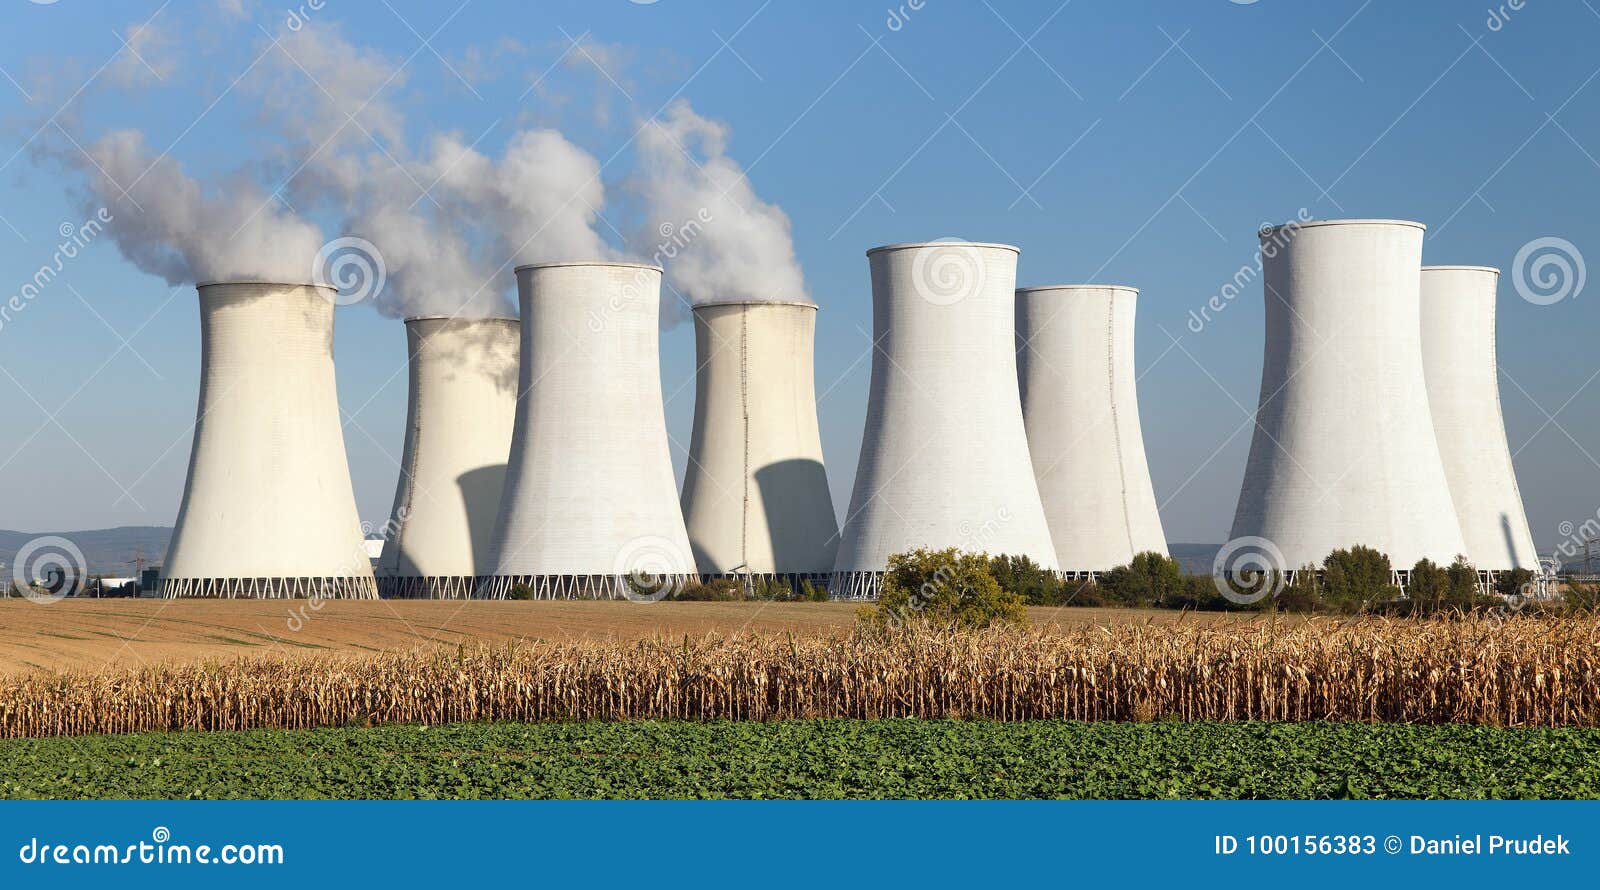 cooling tower of nuclear power plant jaslovske bohunice